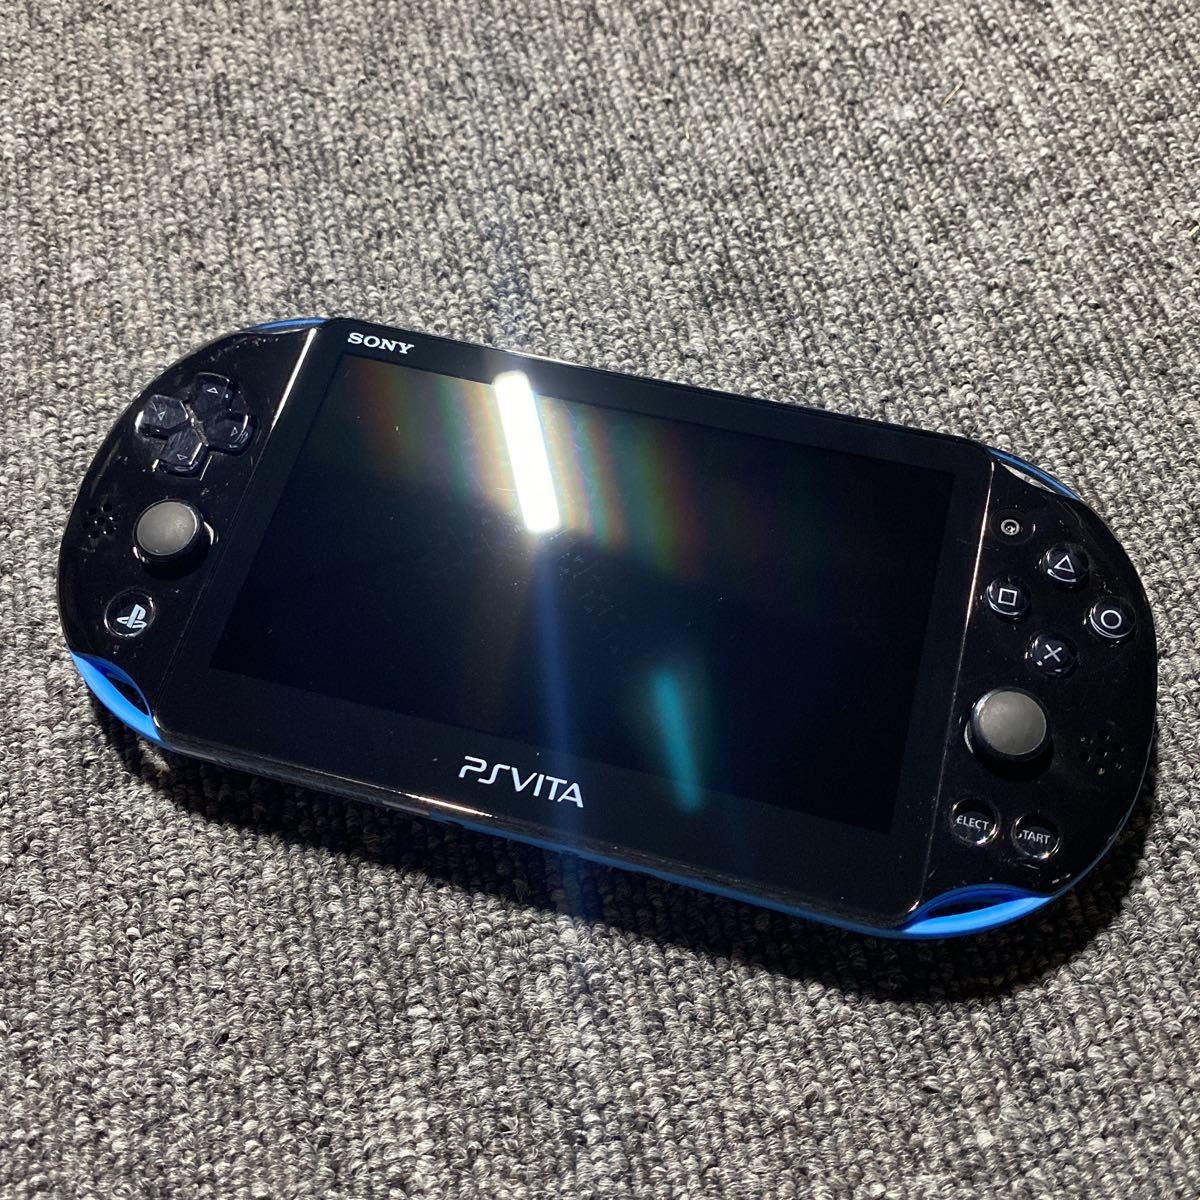 PS Vita PCH-2000 ブルーブラック 本体のみ